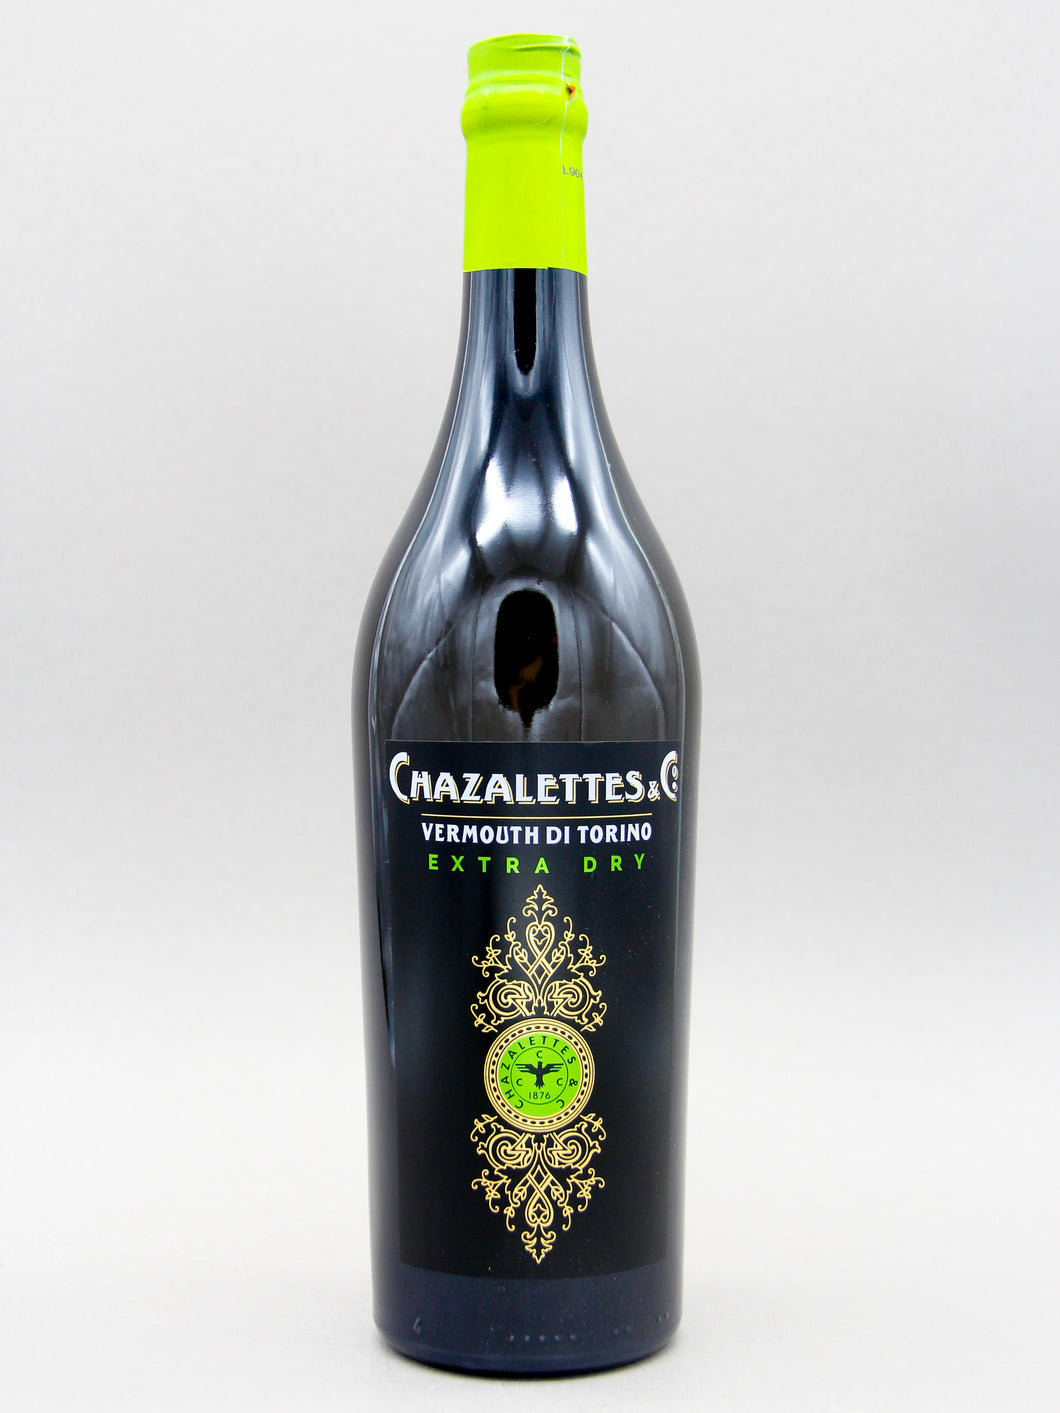 Chazalettes & Co. Vermouth Di Torino Dry (18%, 75cl)